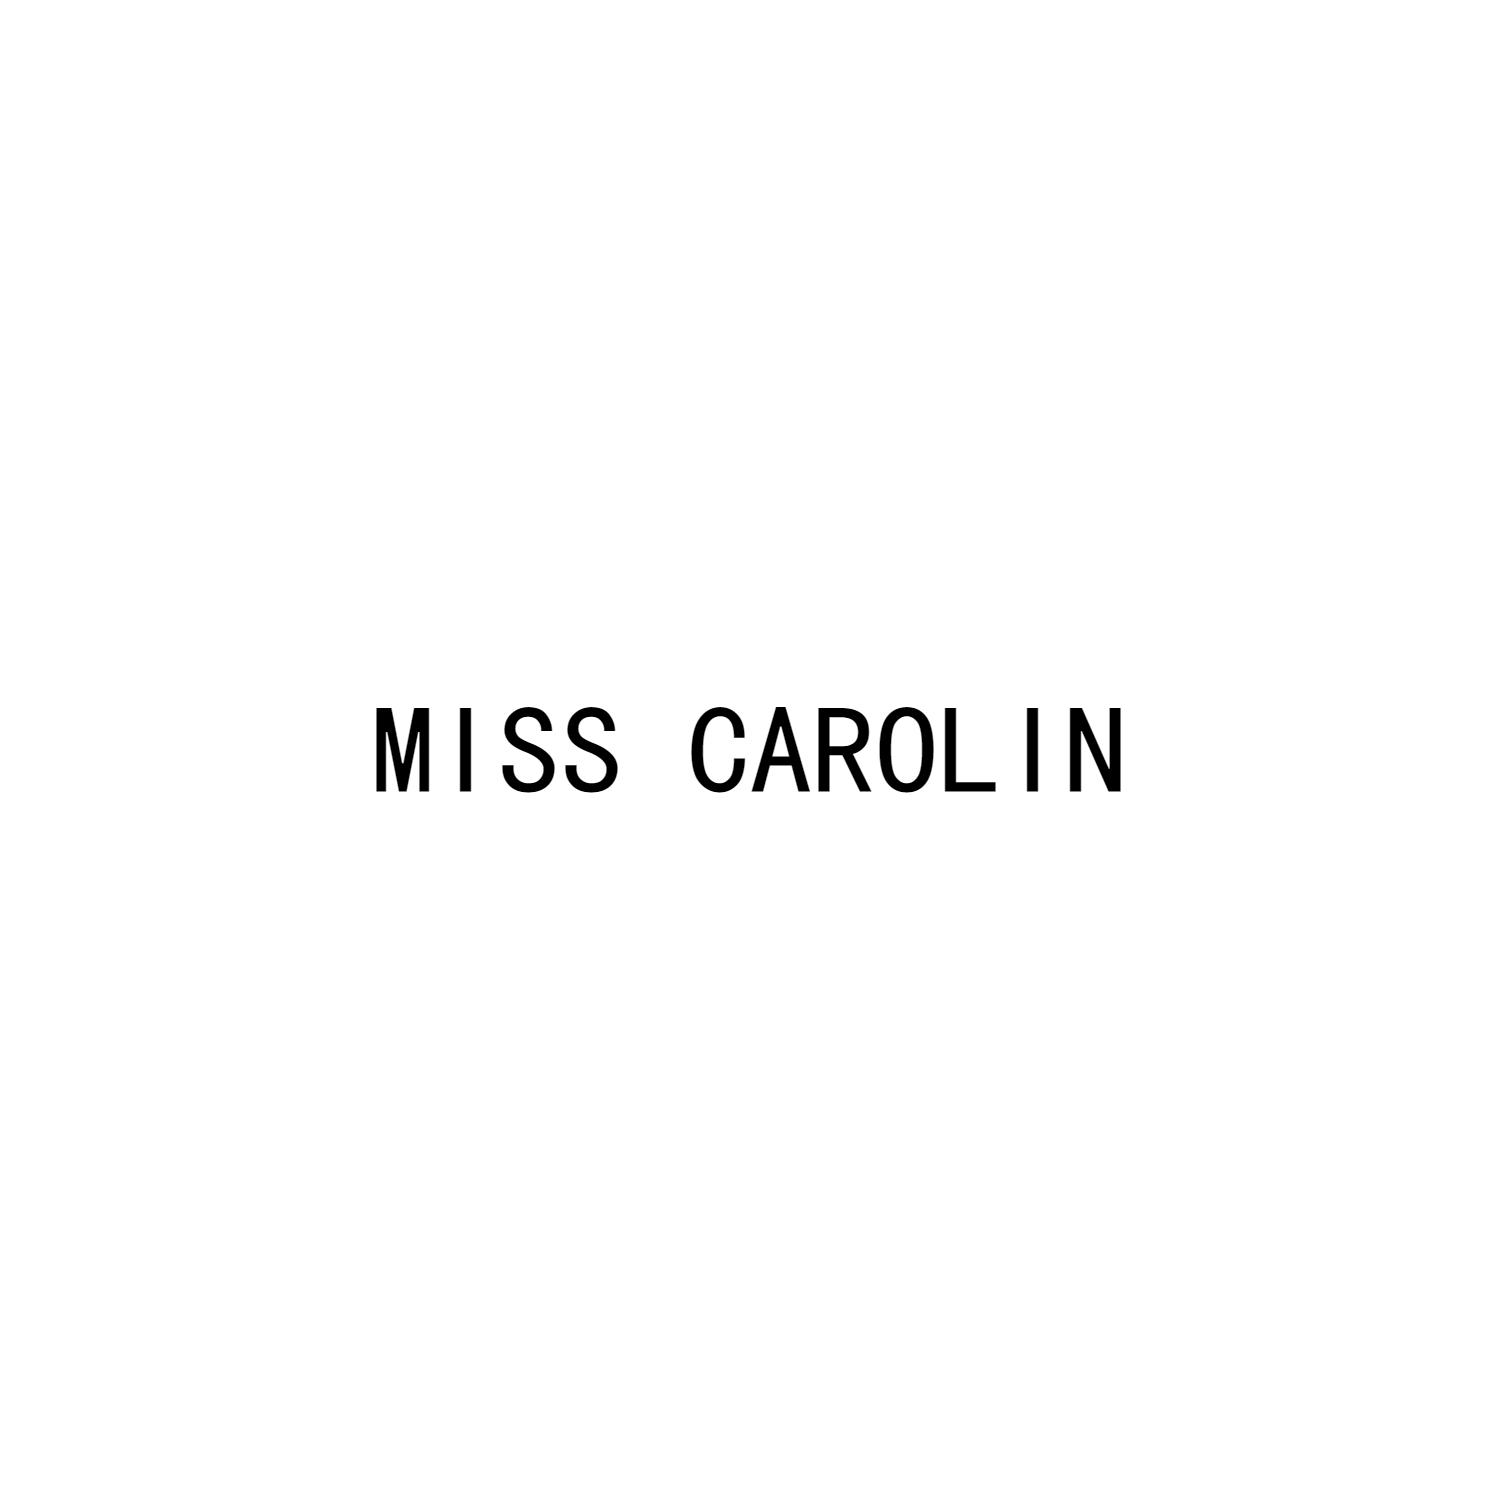 MISS CAROLIN